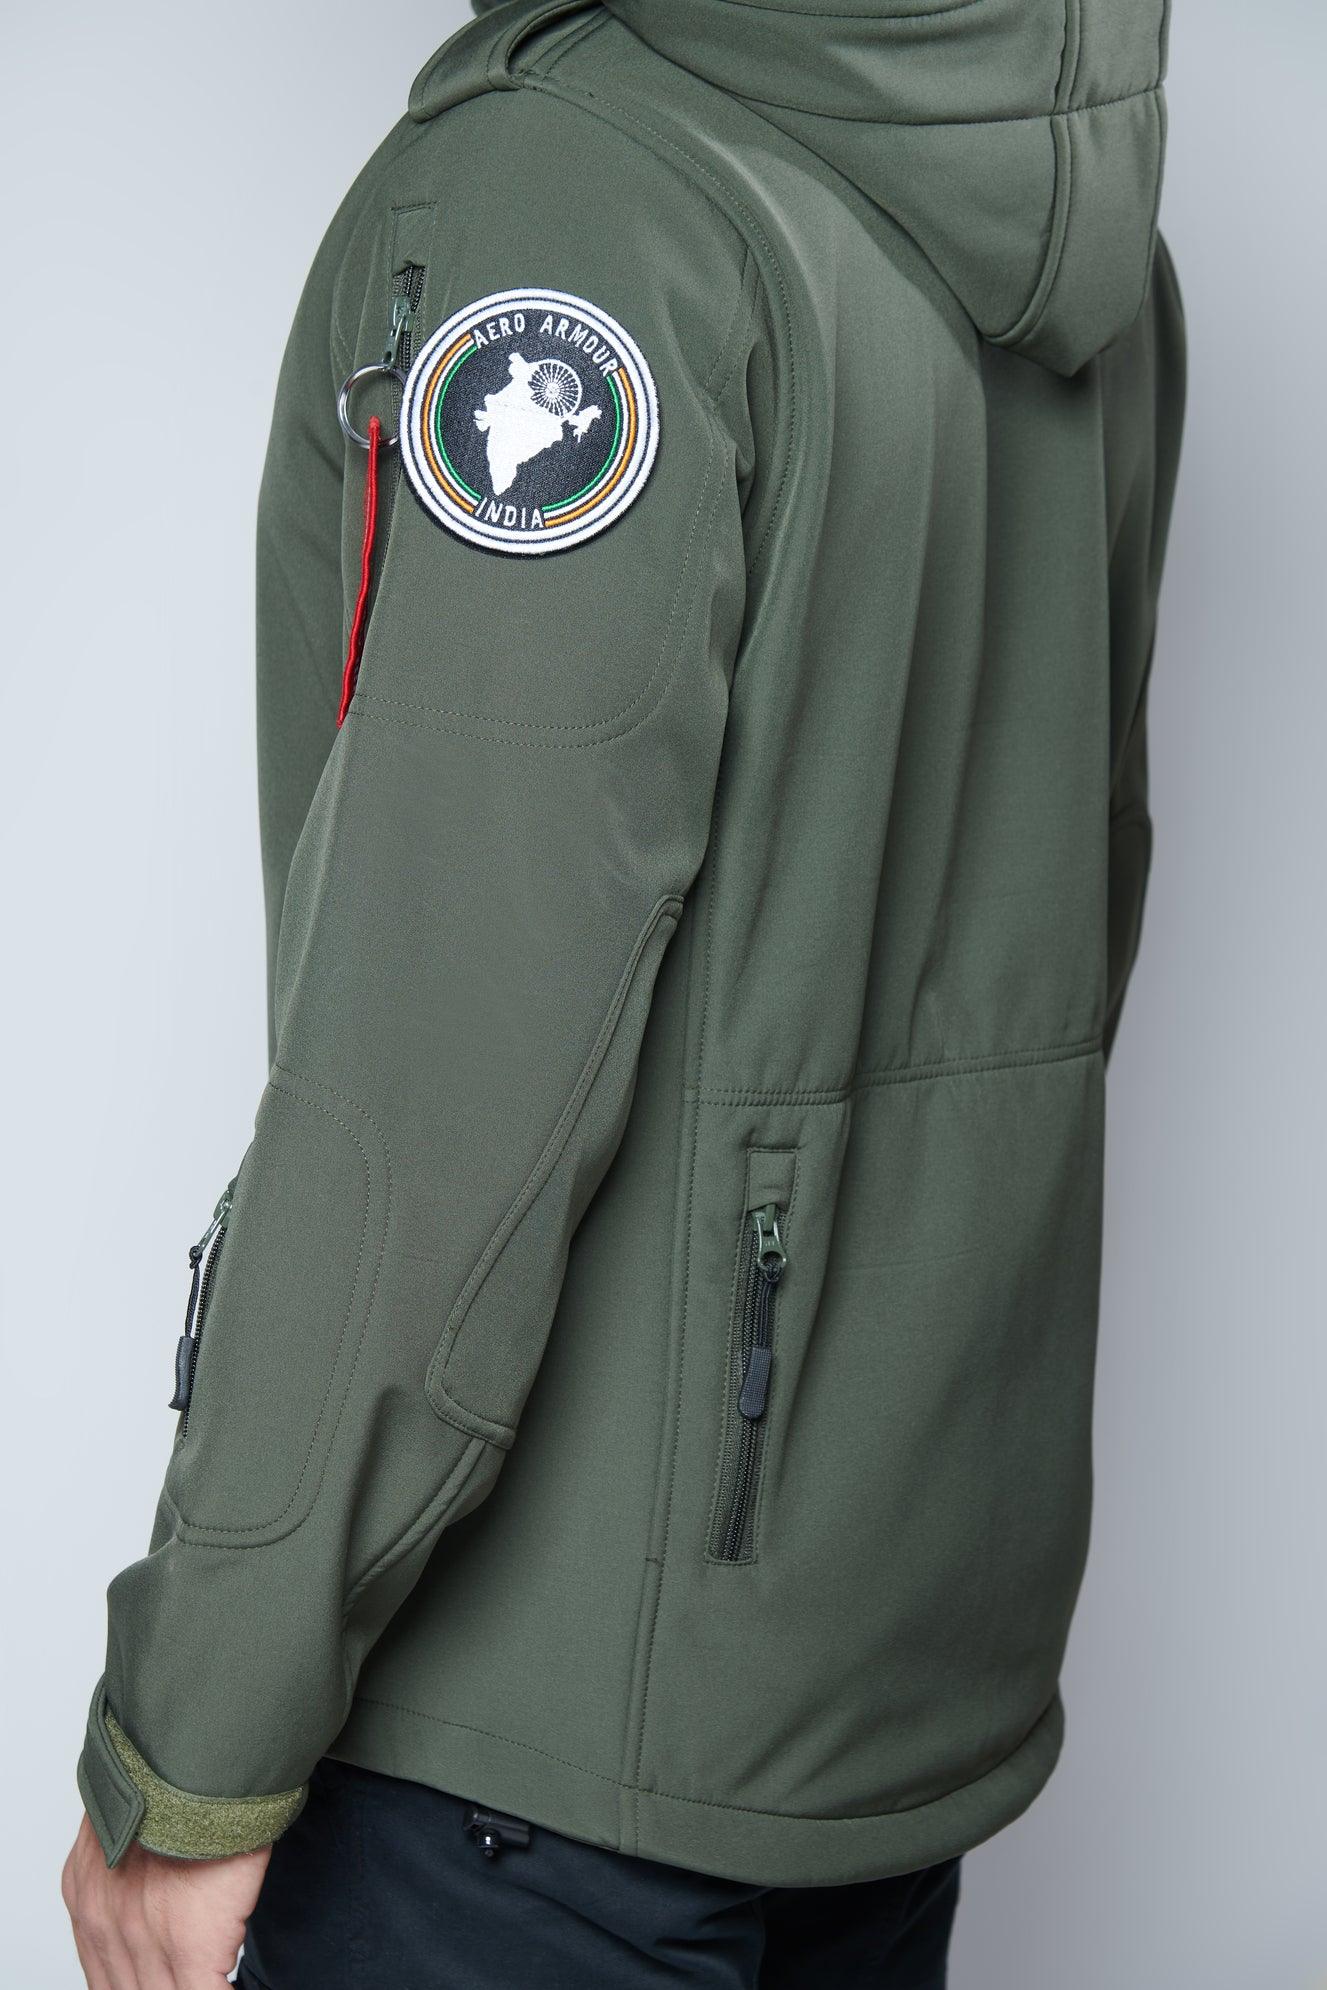 Aero Force Tejas Limited Edition Jacket - Aero Armour